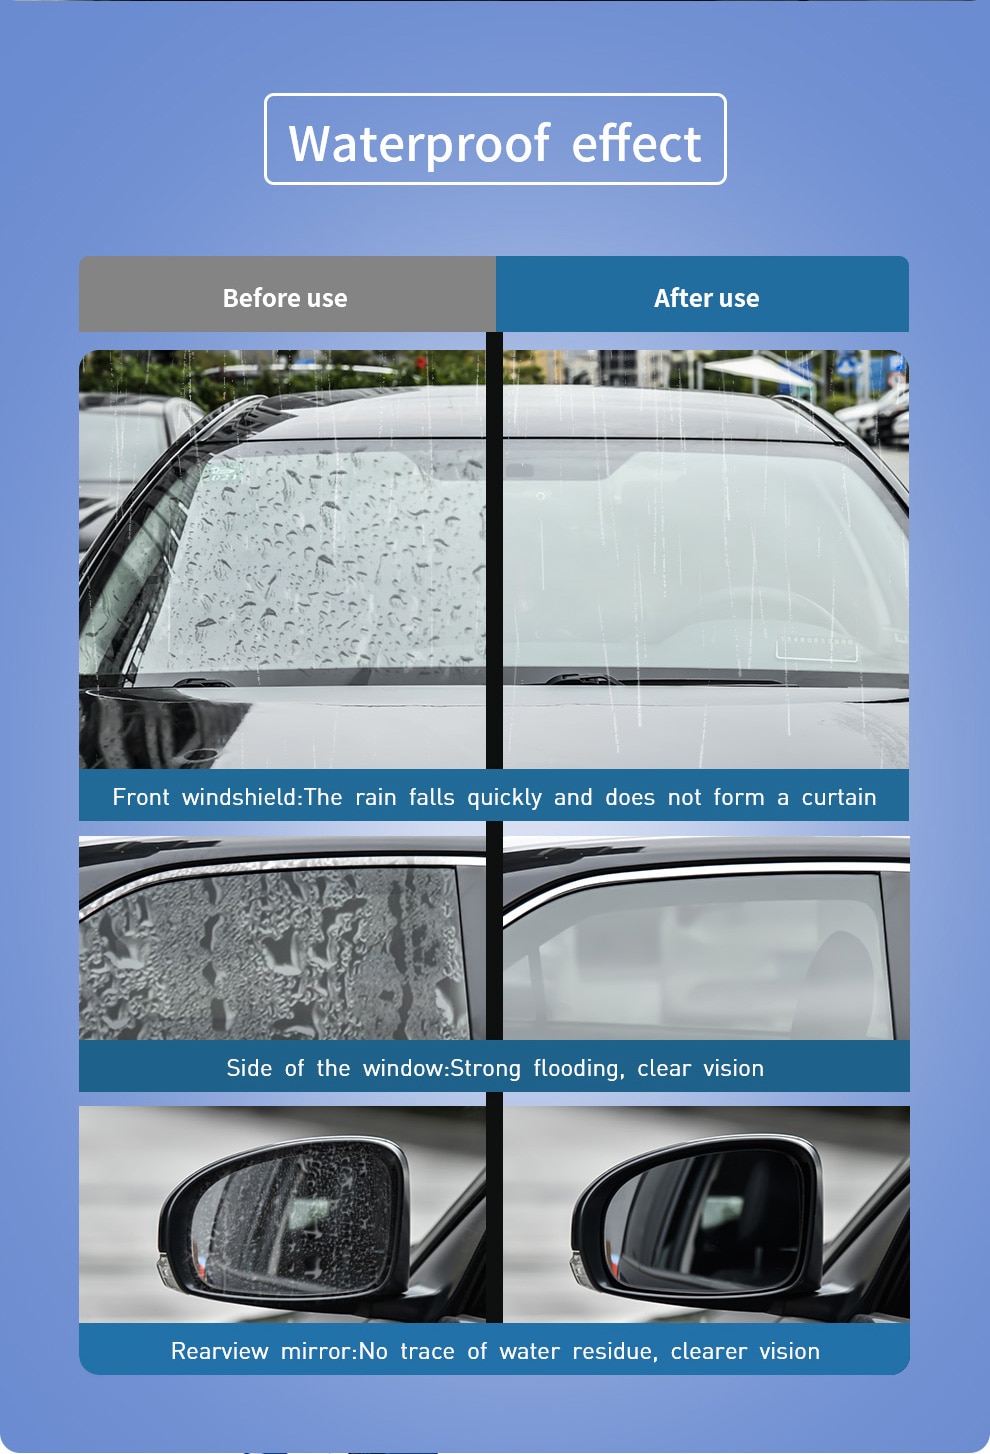 Car Window Glass Rainproof Agent 100ml Hydrophobic Auto Windshield Rearview Mirror Waterproof Car Care Accessories